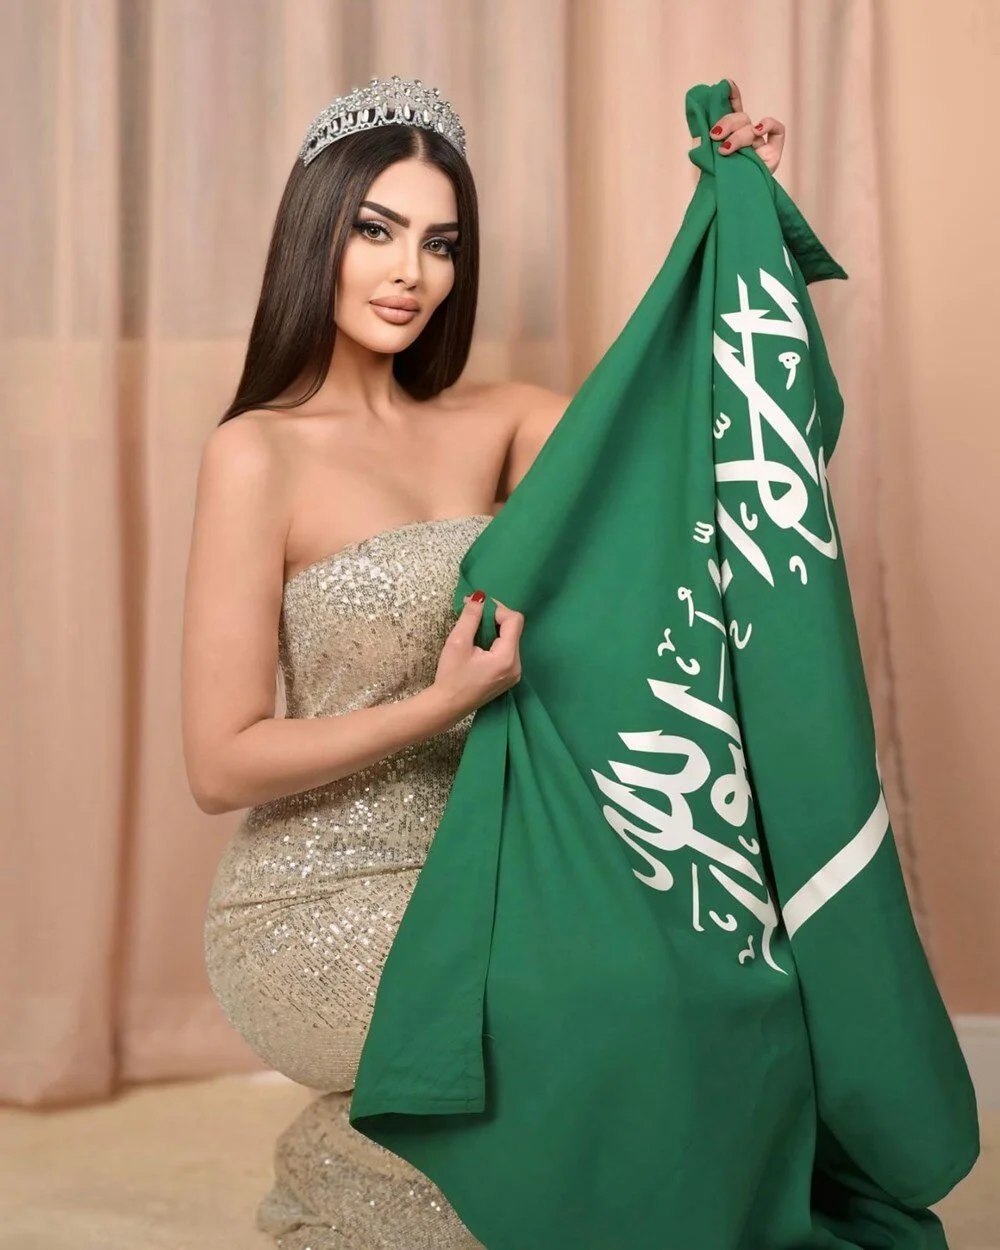 Suudi Arabistanli Model Rumy Al Qahtani Kainat Guzeli Olma Yolunda (3)